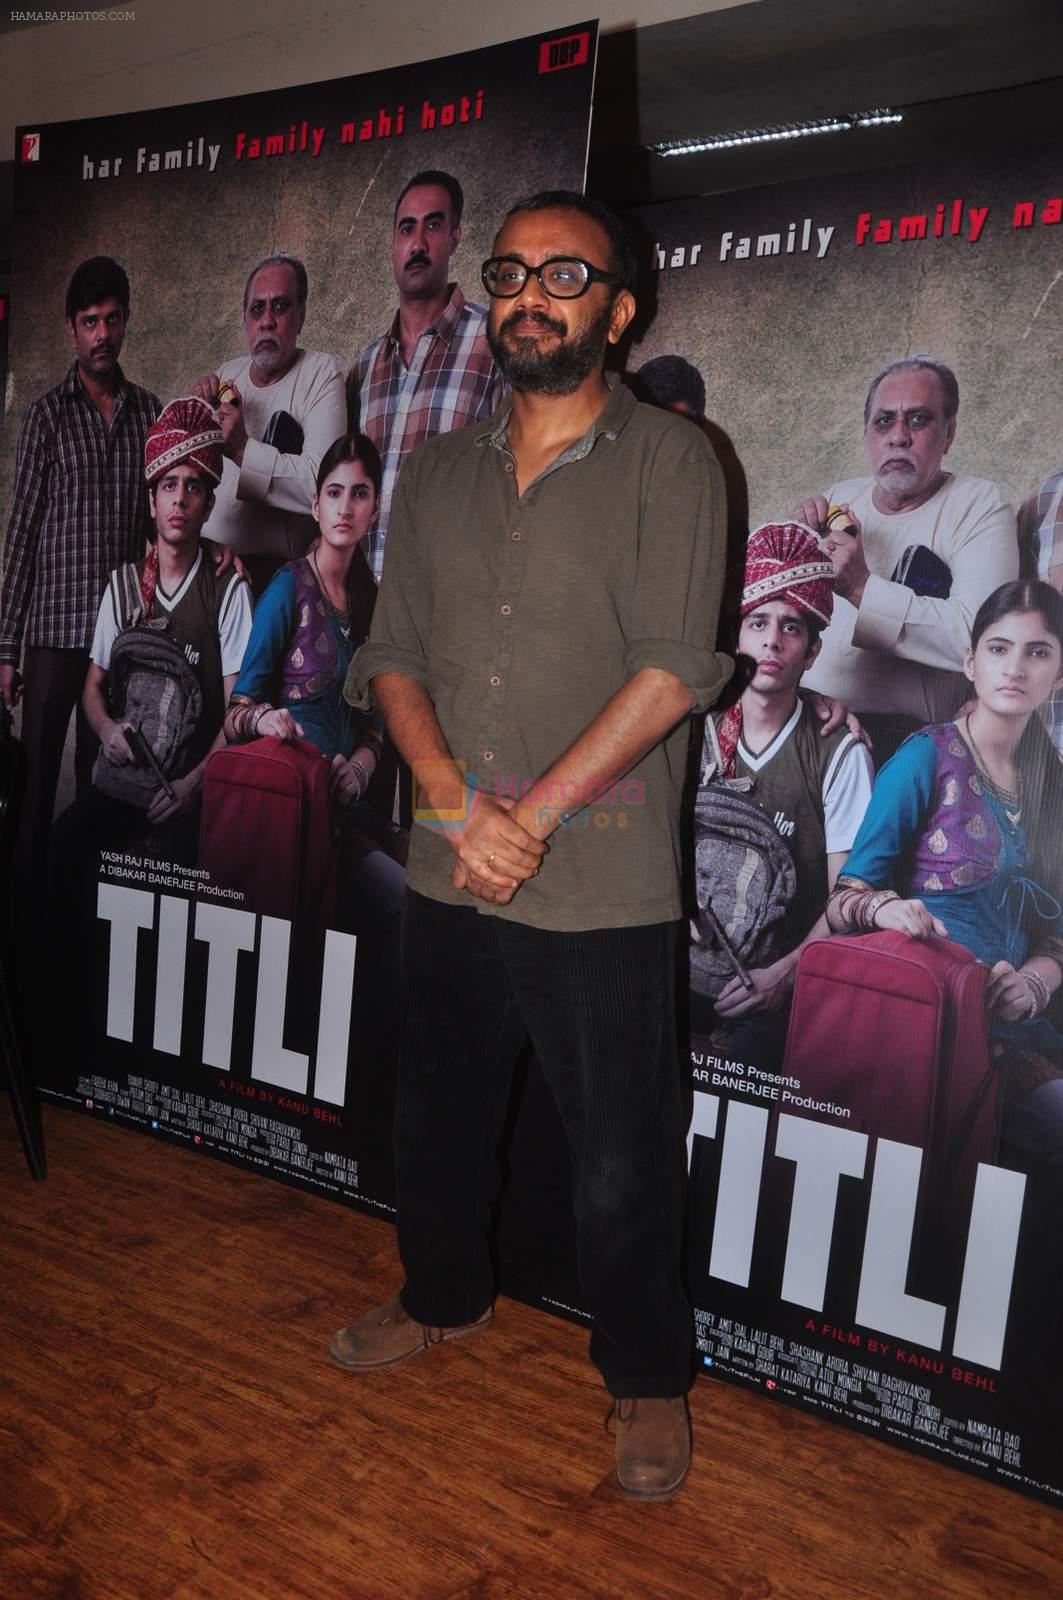 Dibakar Banerjee at Titli film promotions on 16th Oct 2015